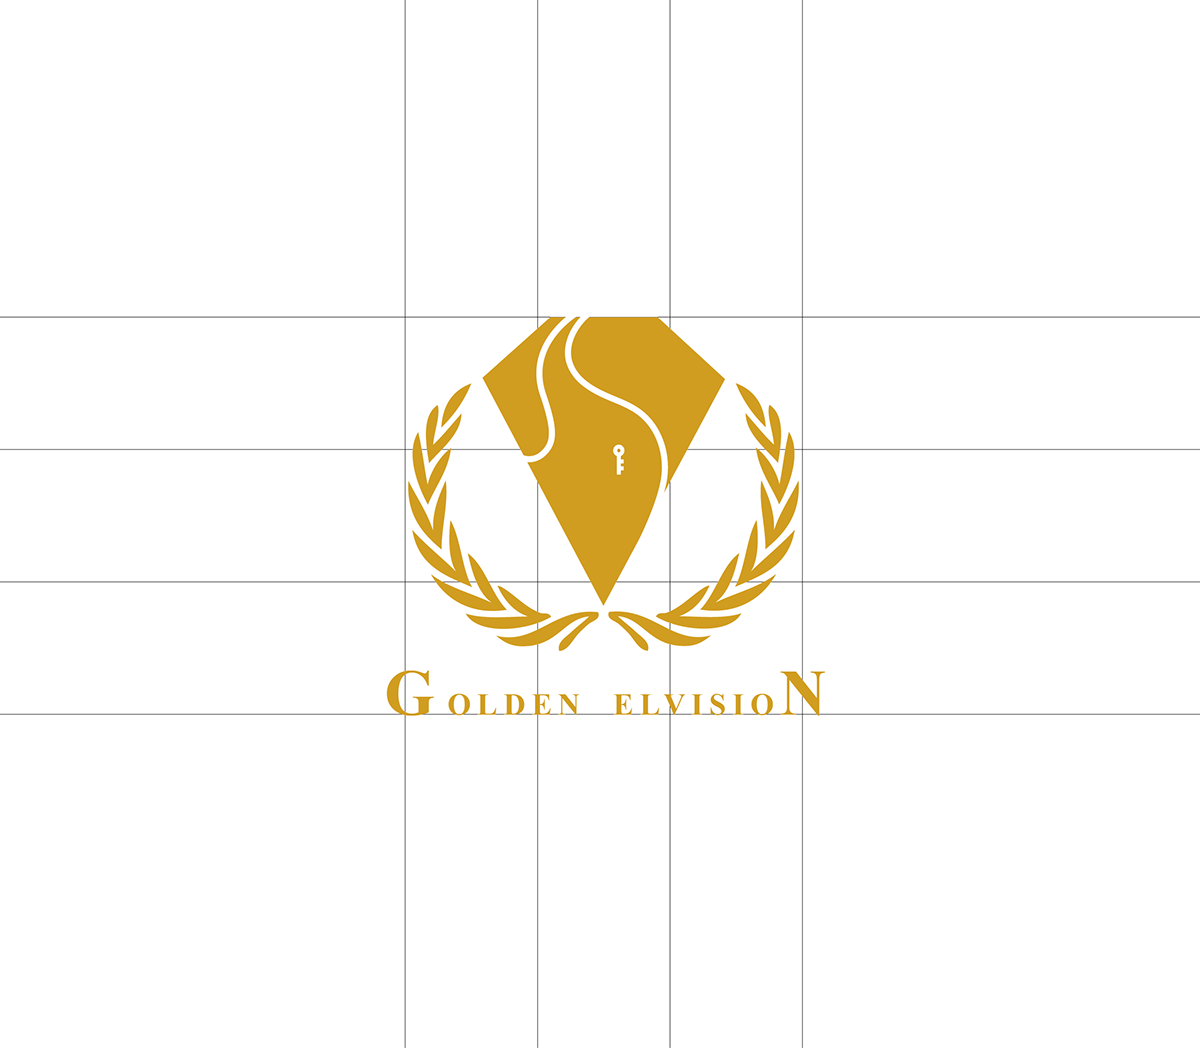 golden elephant Education logo graphic business